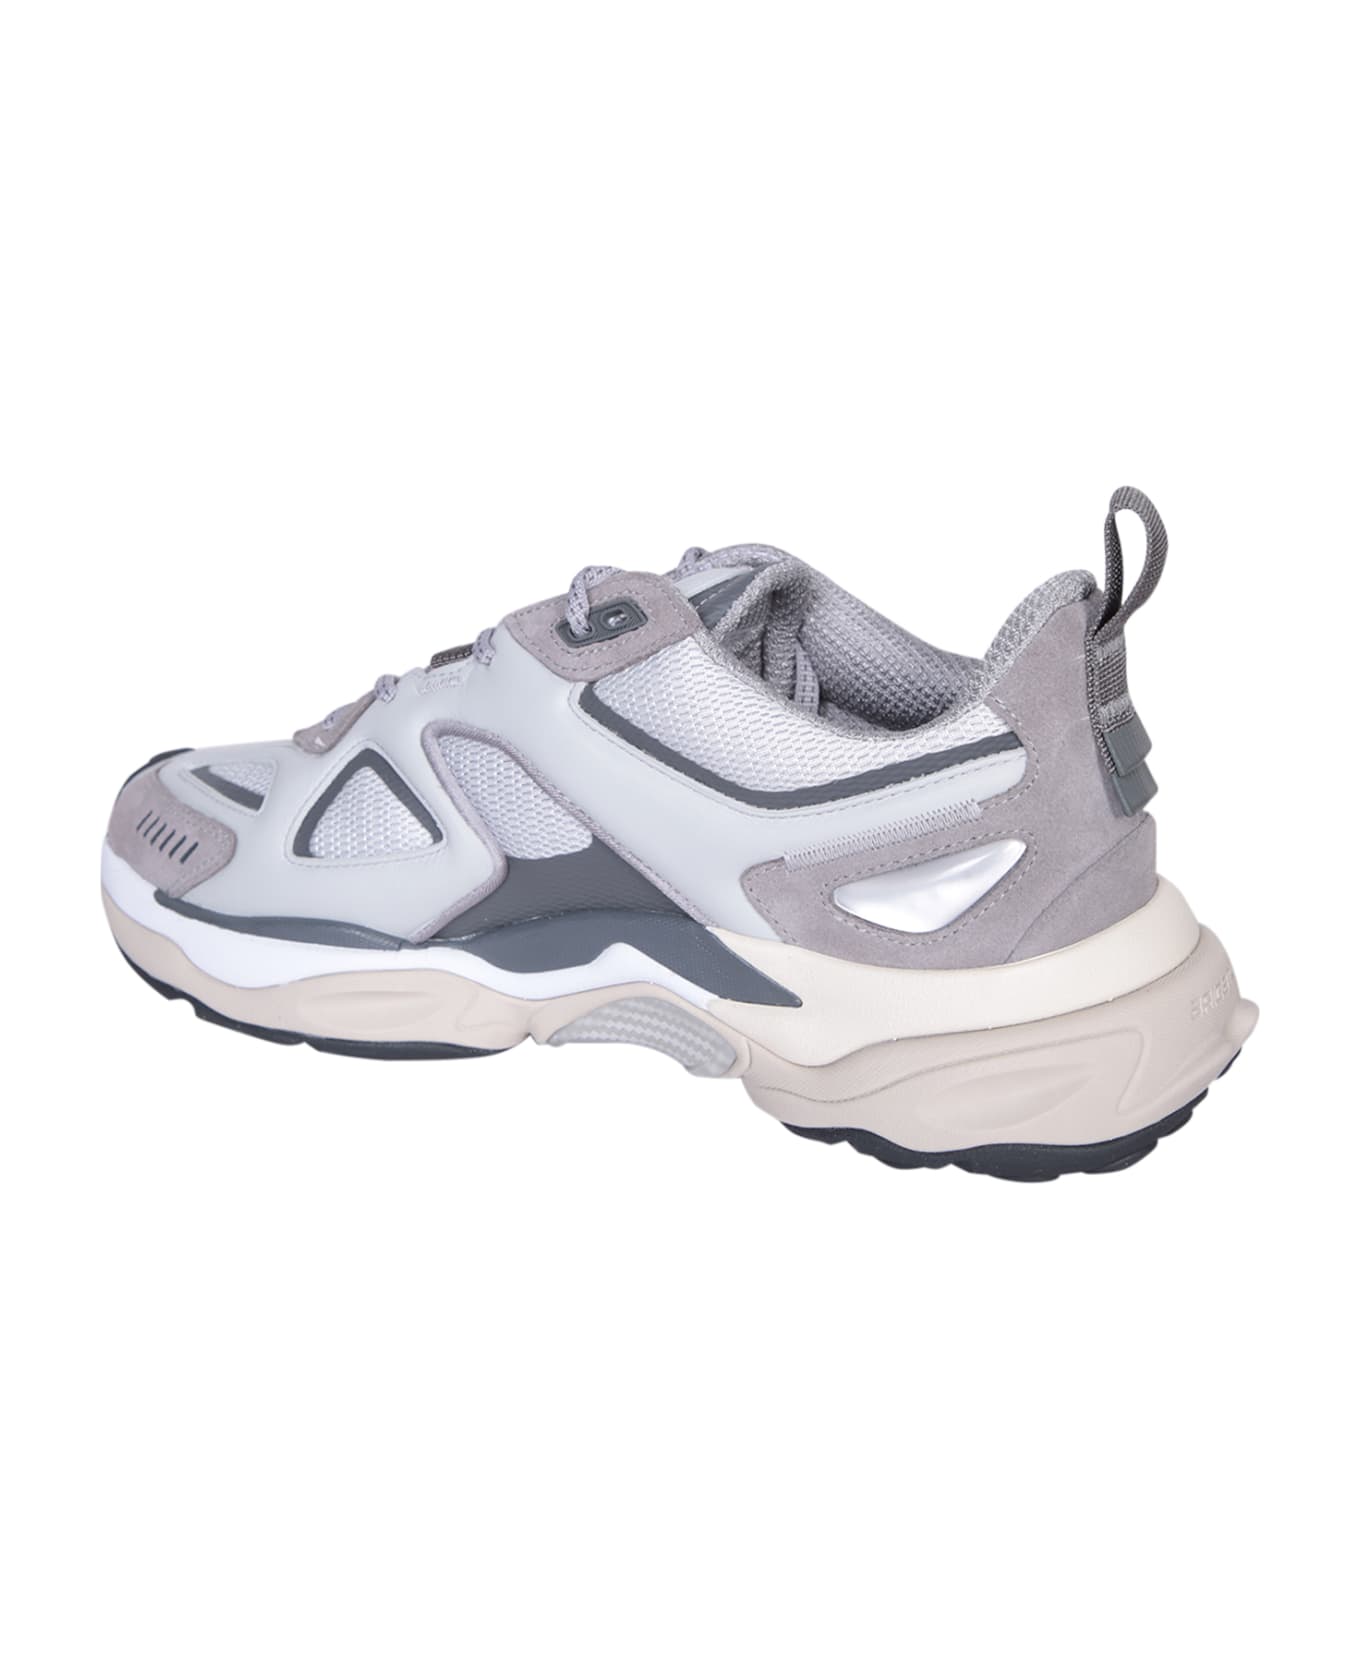 Axel Arigato Satellite Runner Grey Sneakers - Grey スニーカー